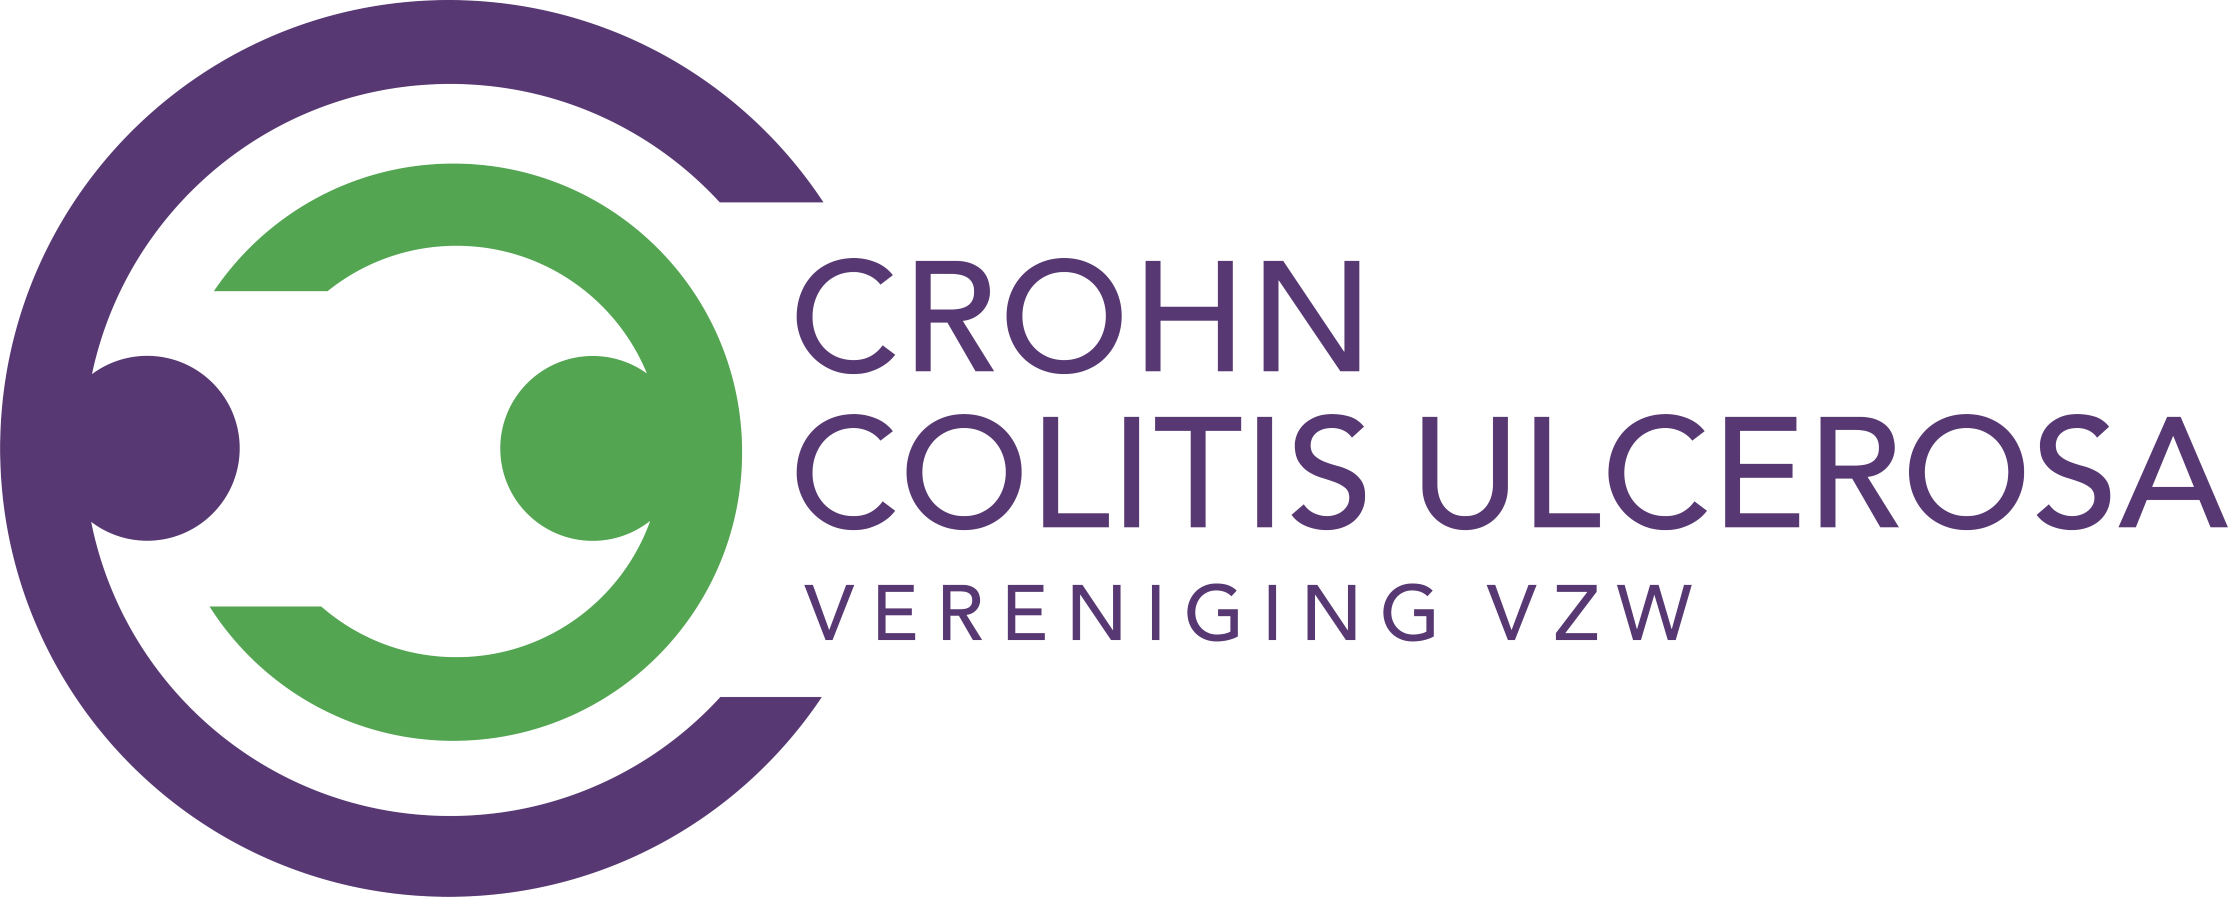 Crohn en colitis ulcerosa vereniging logo